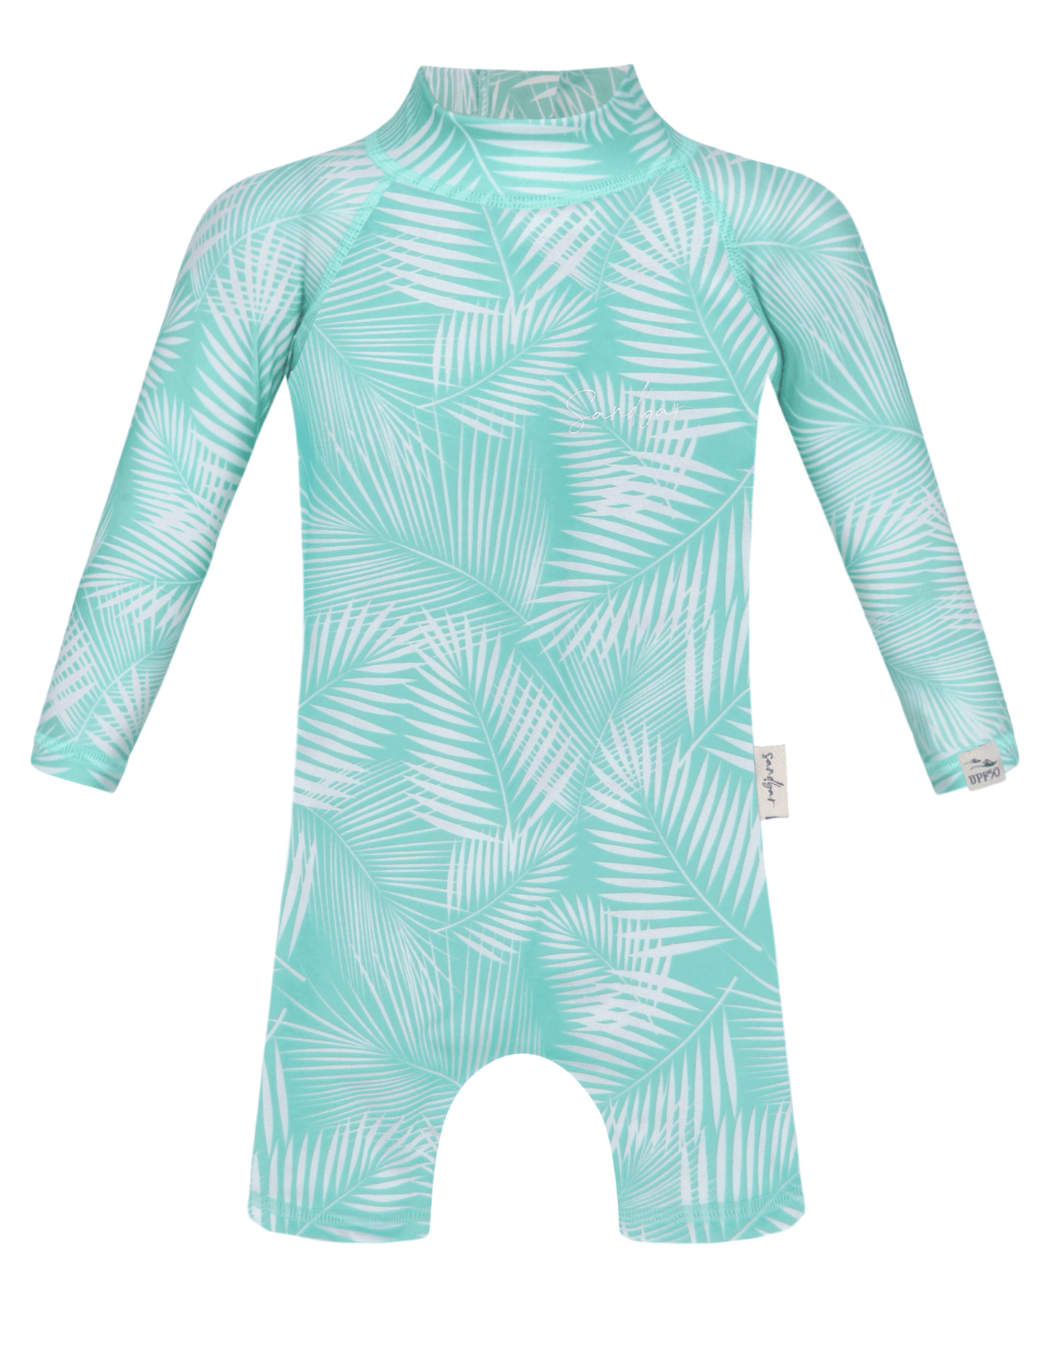 Sandbar_upf50_Baby_Swim_suit_green_fern